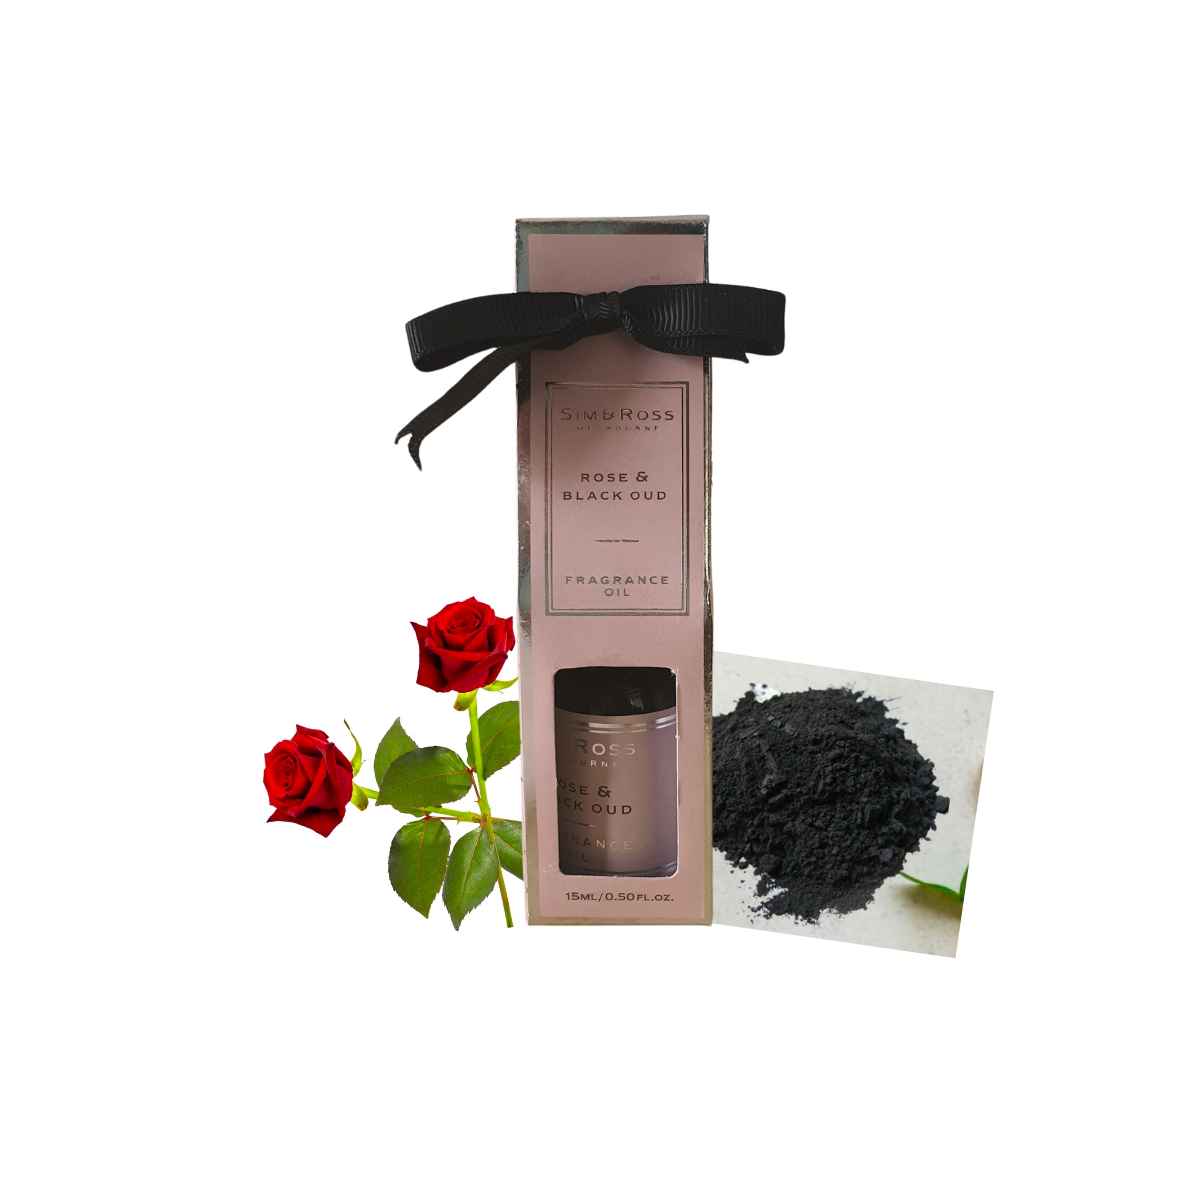 fragrance oil rose and black oud